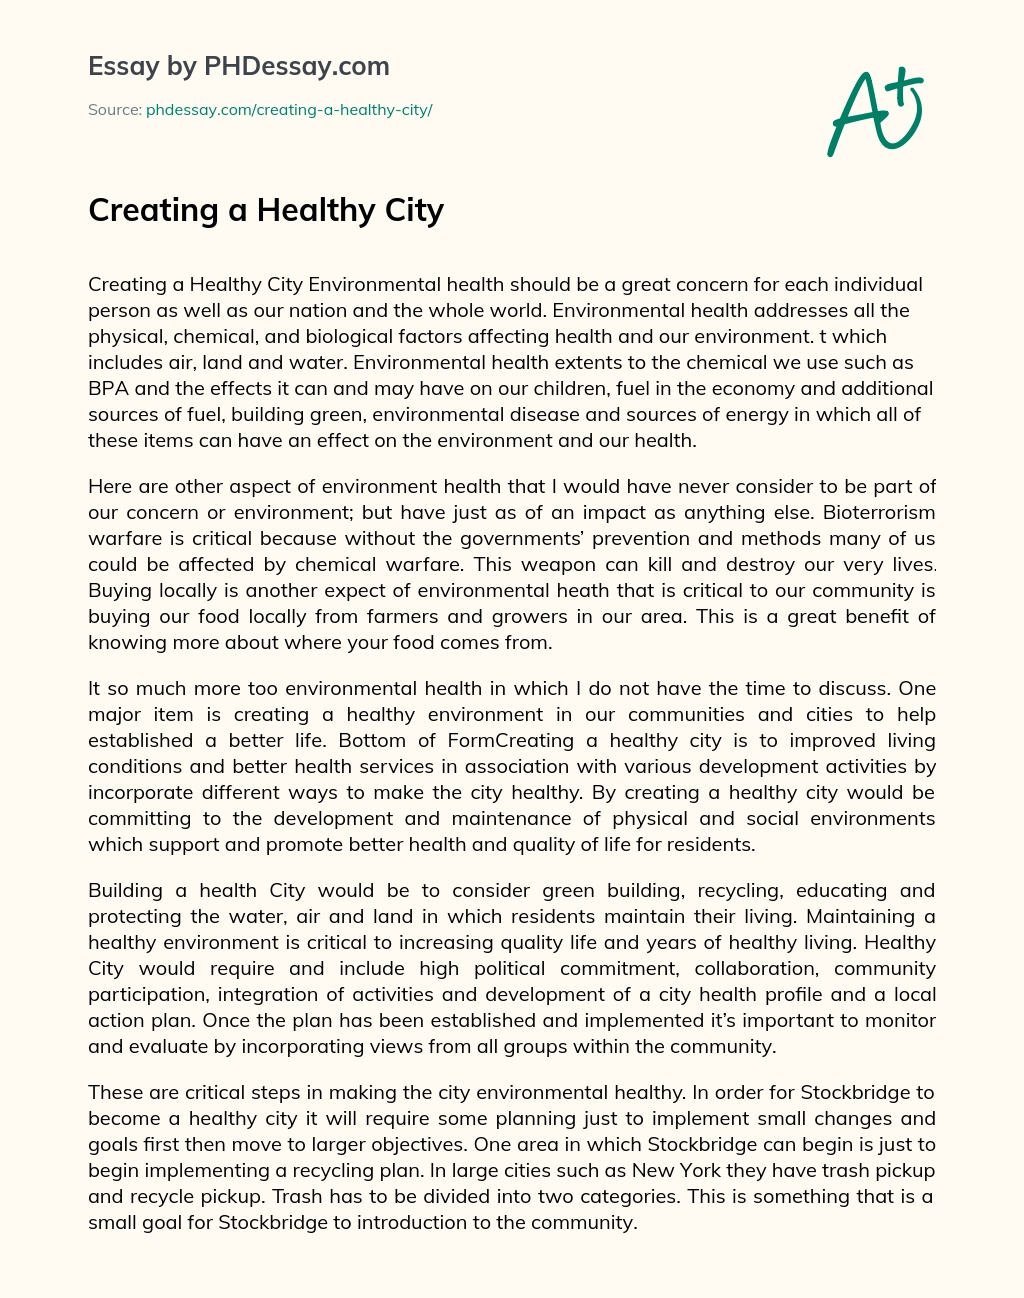 Creating a Healthy City essay